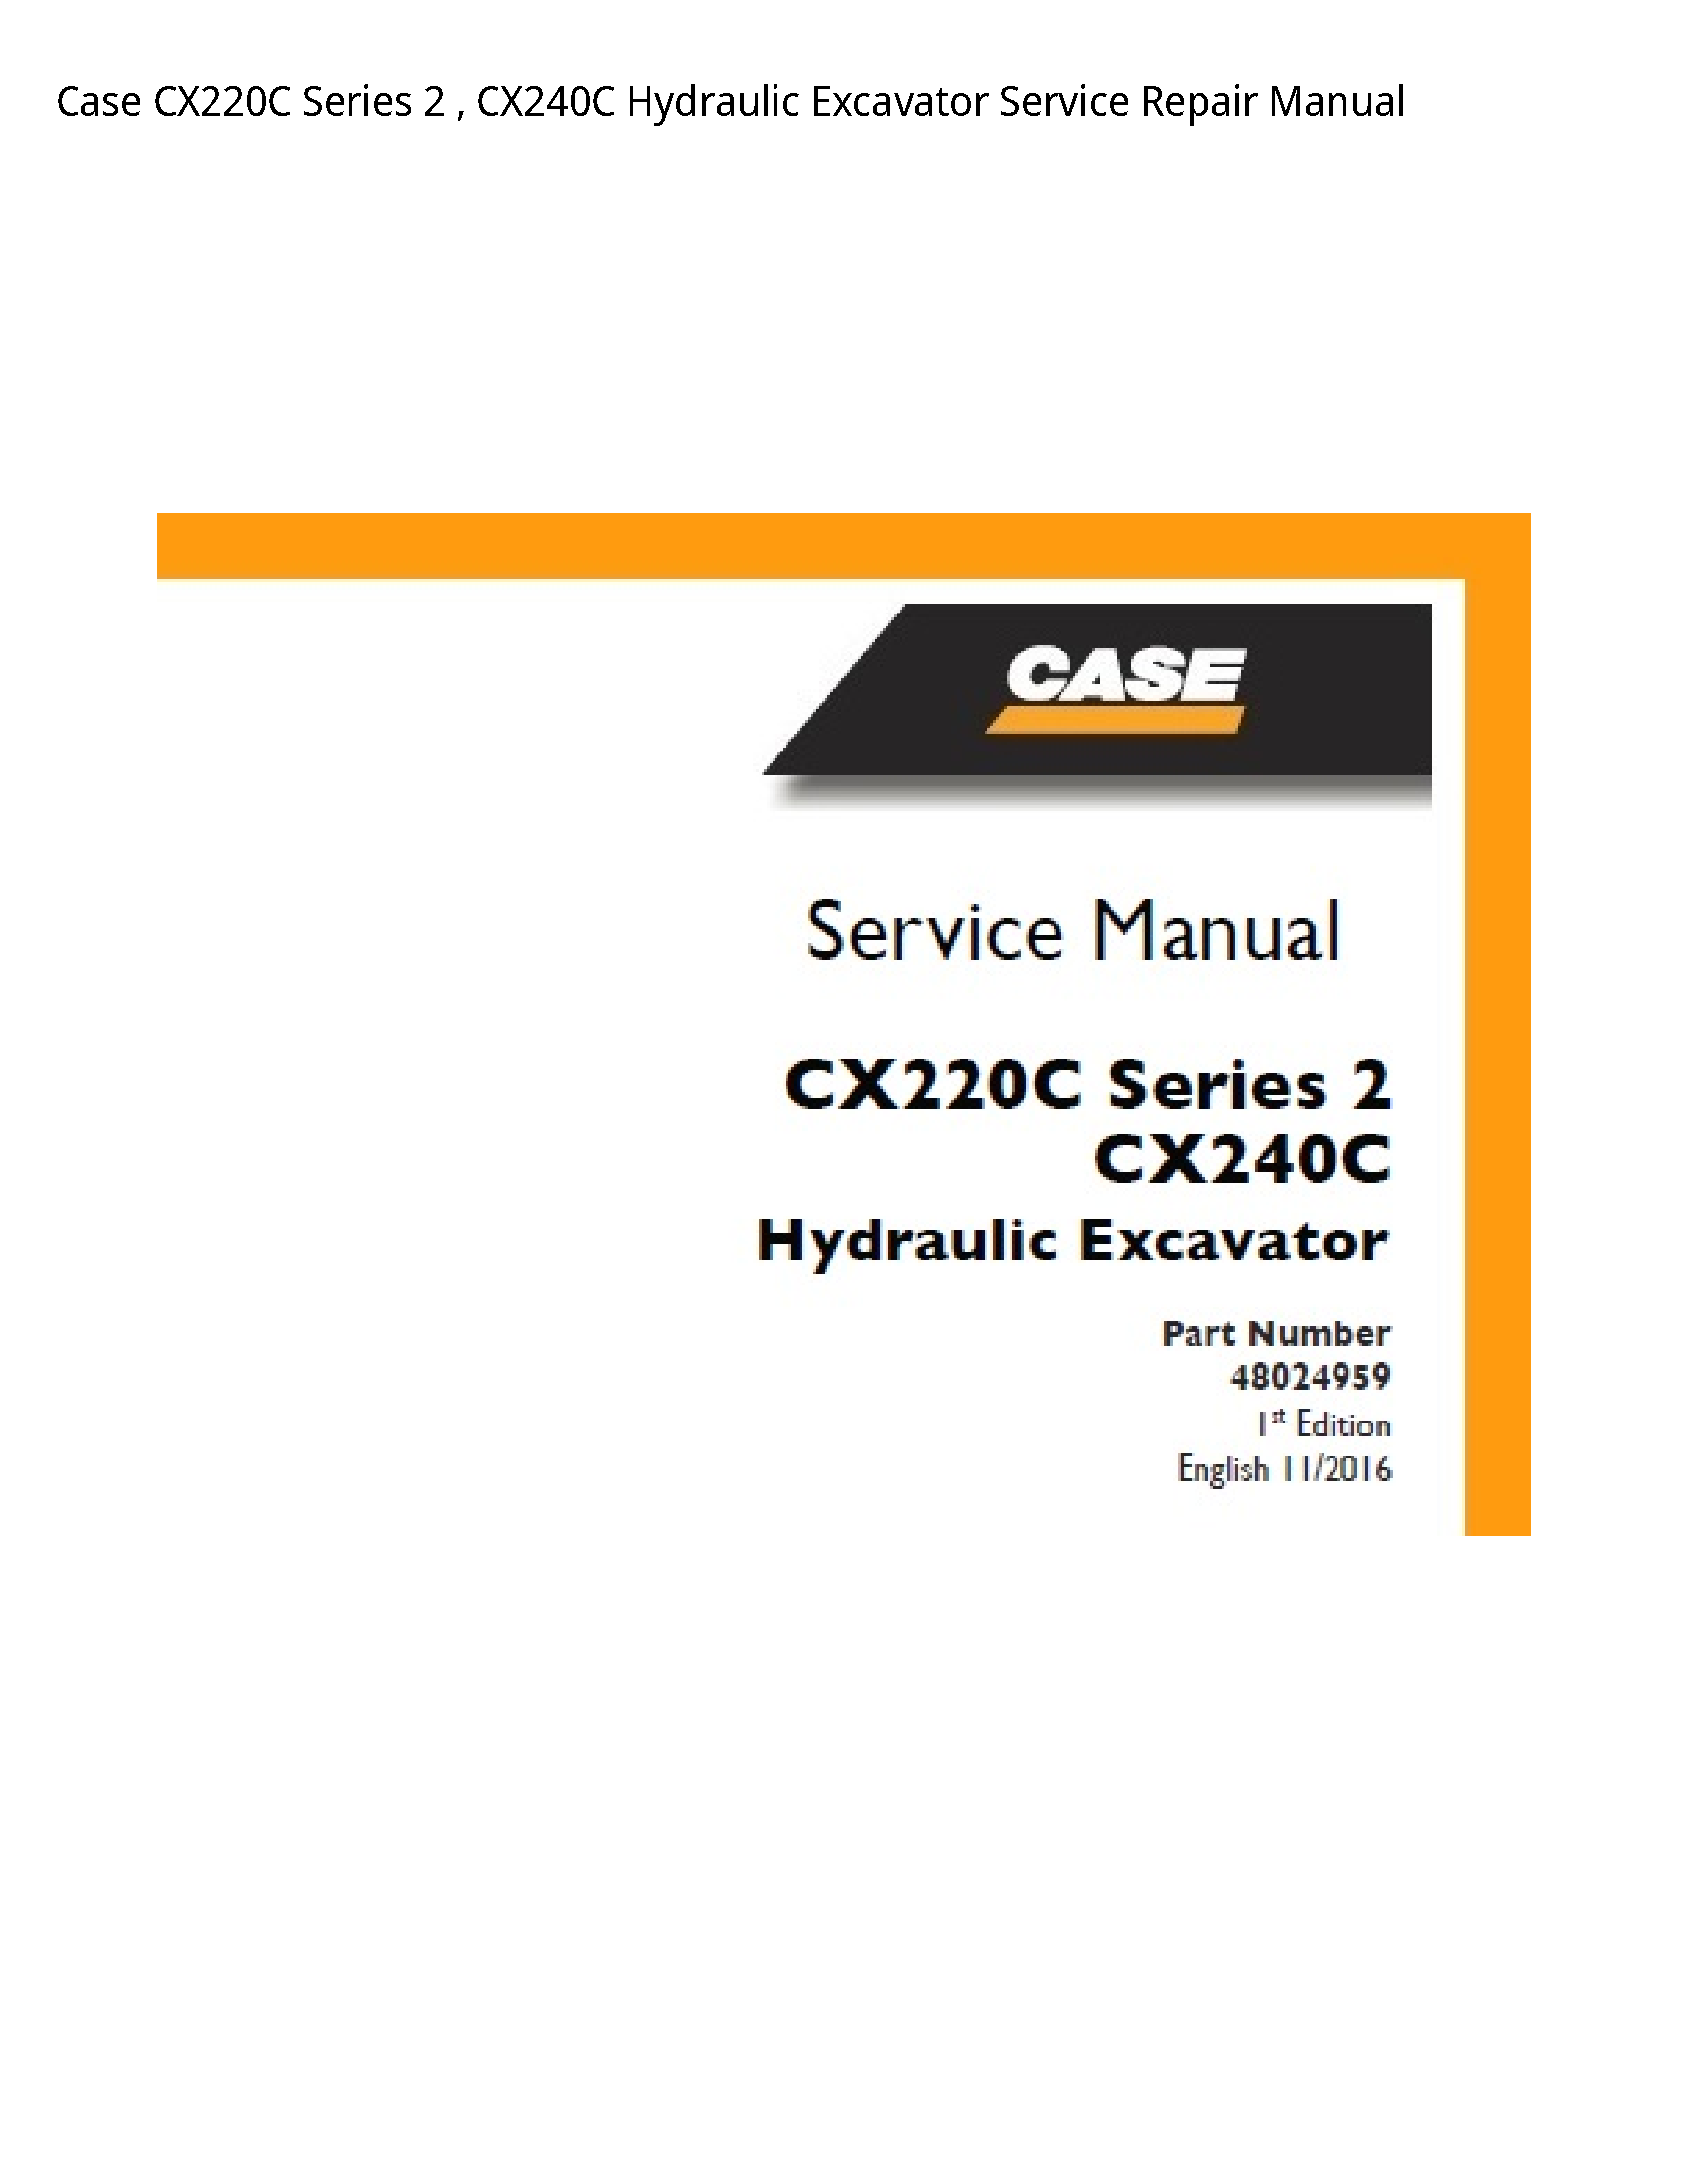 Case/Case IH CX220C Series Hydraulic Excavator manual